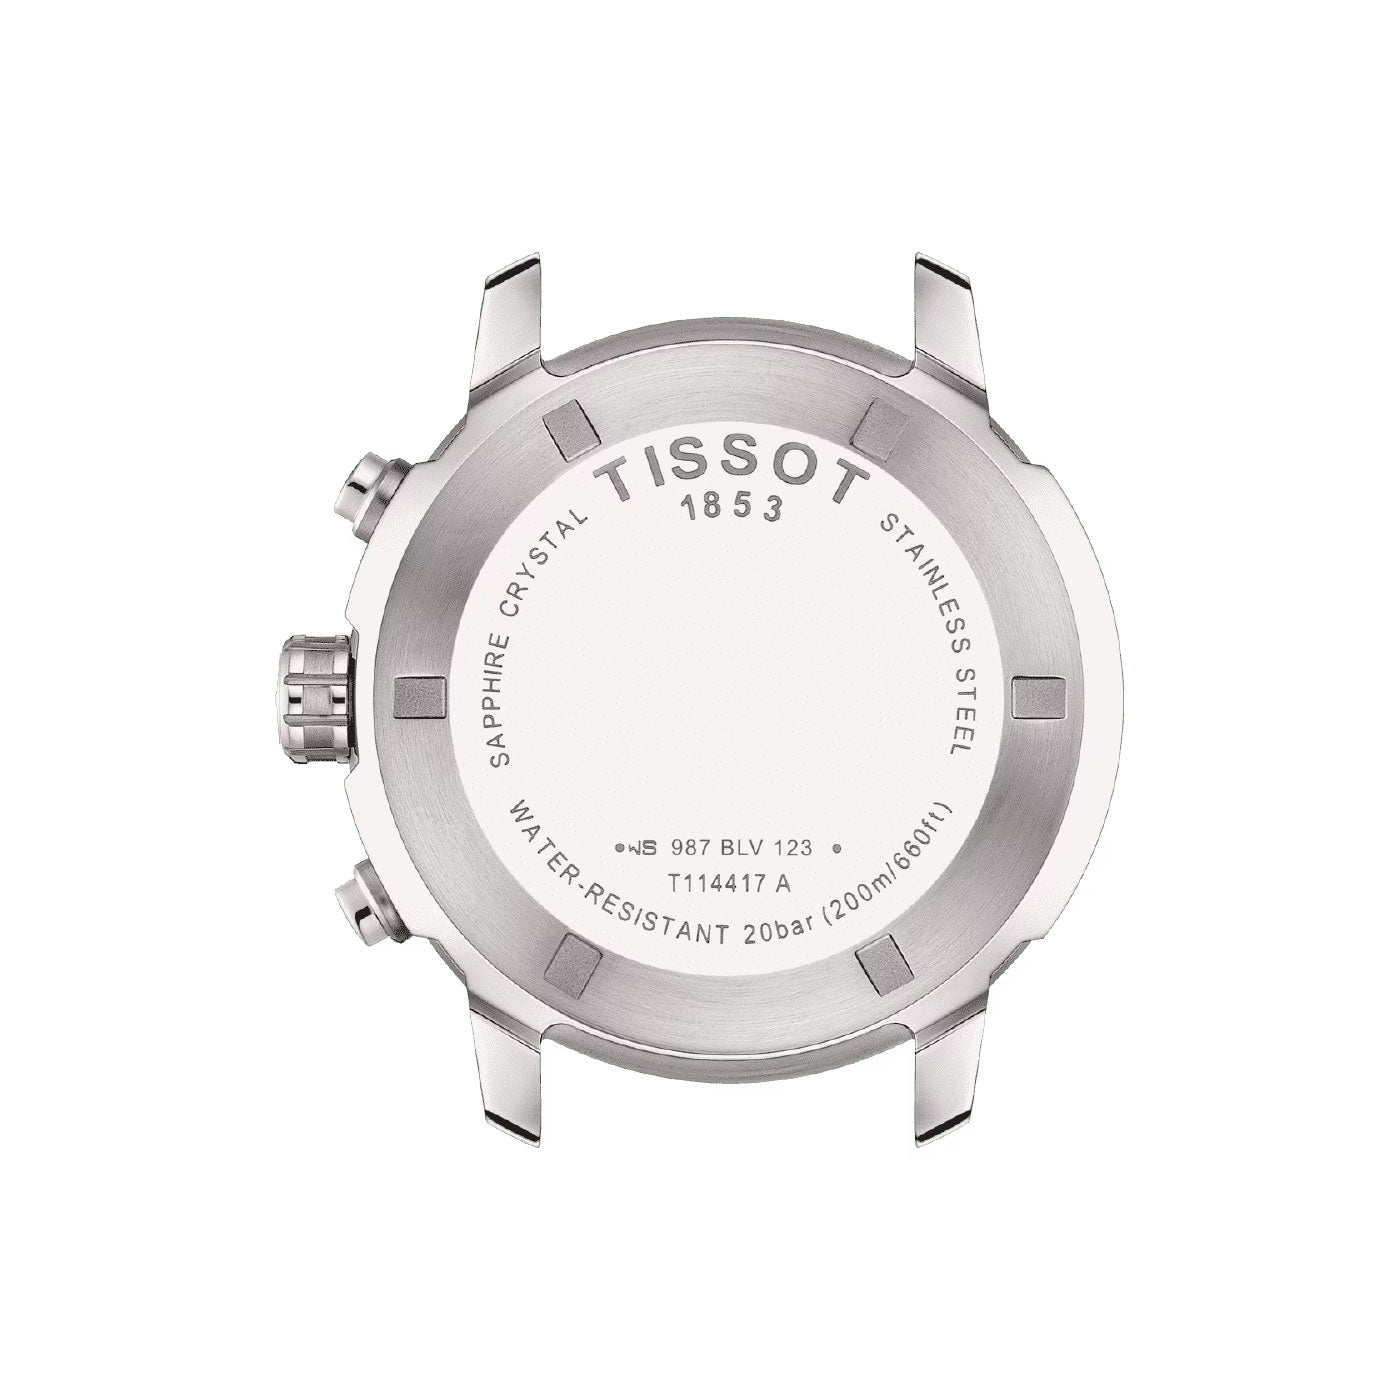 Tissot PRC 200 Chronograph Quartz 43mm Watch